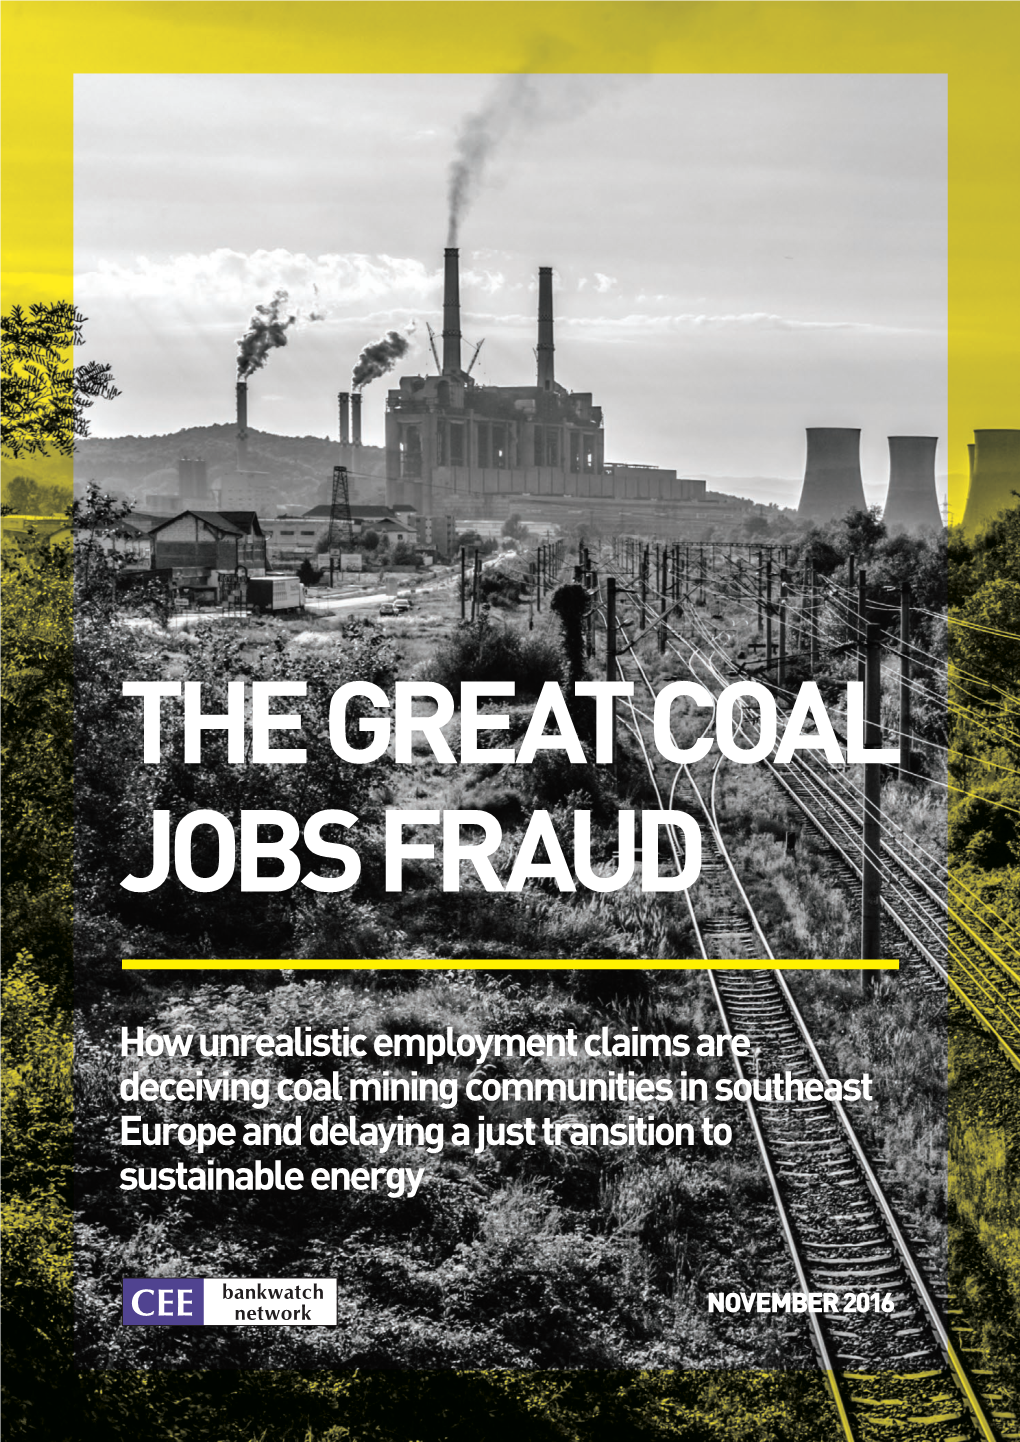 The Great Coal Jobs Fraud